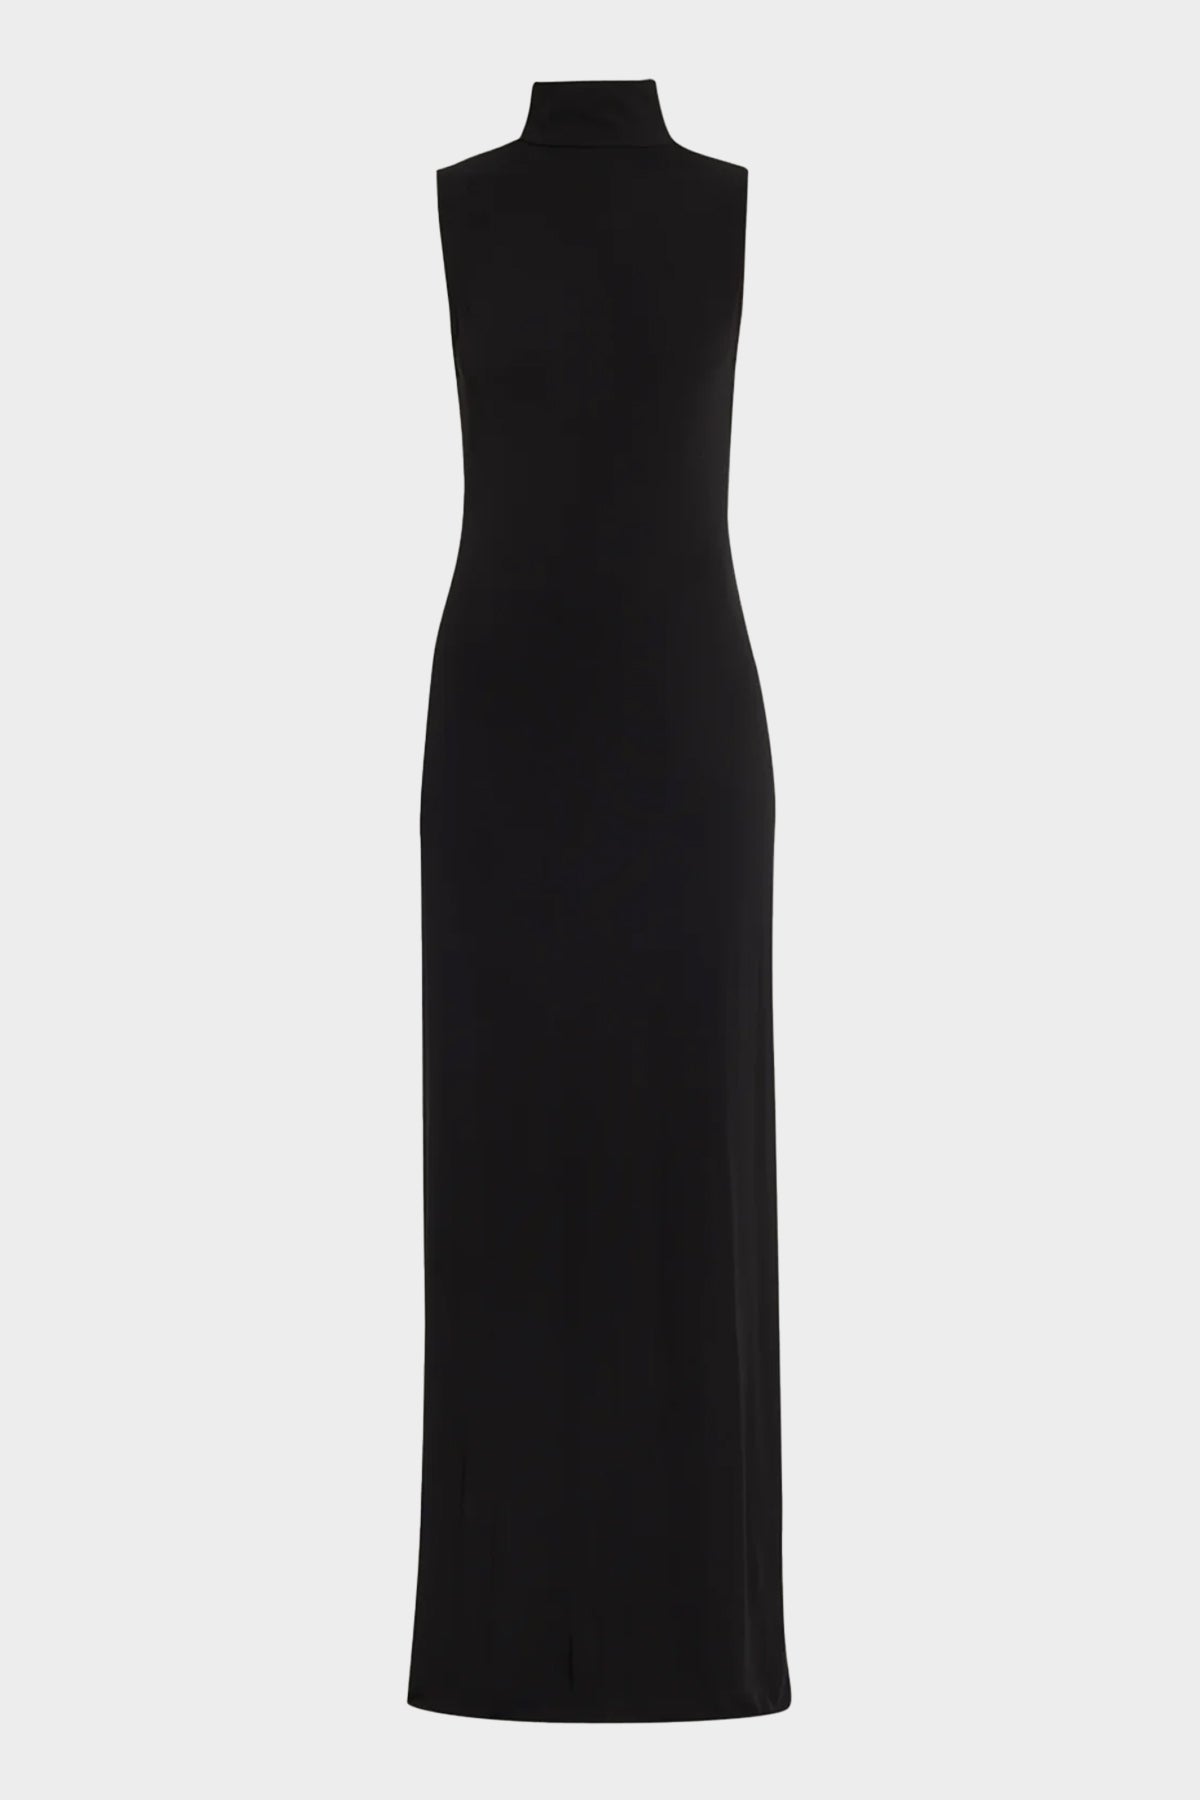 Reid Dress in Black - shop-olivia.com